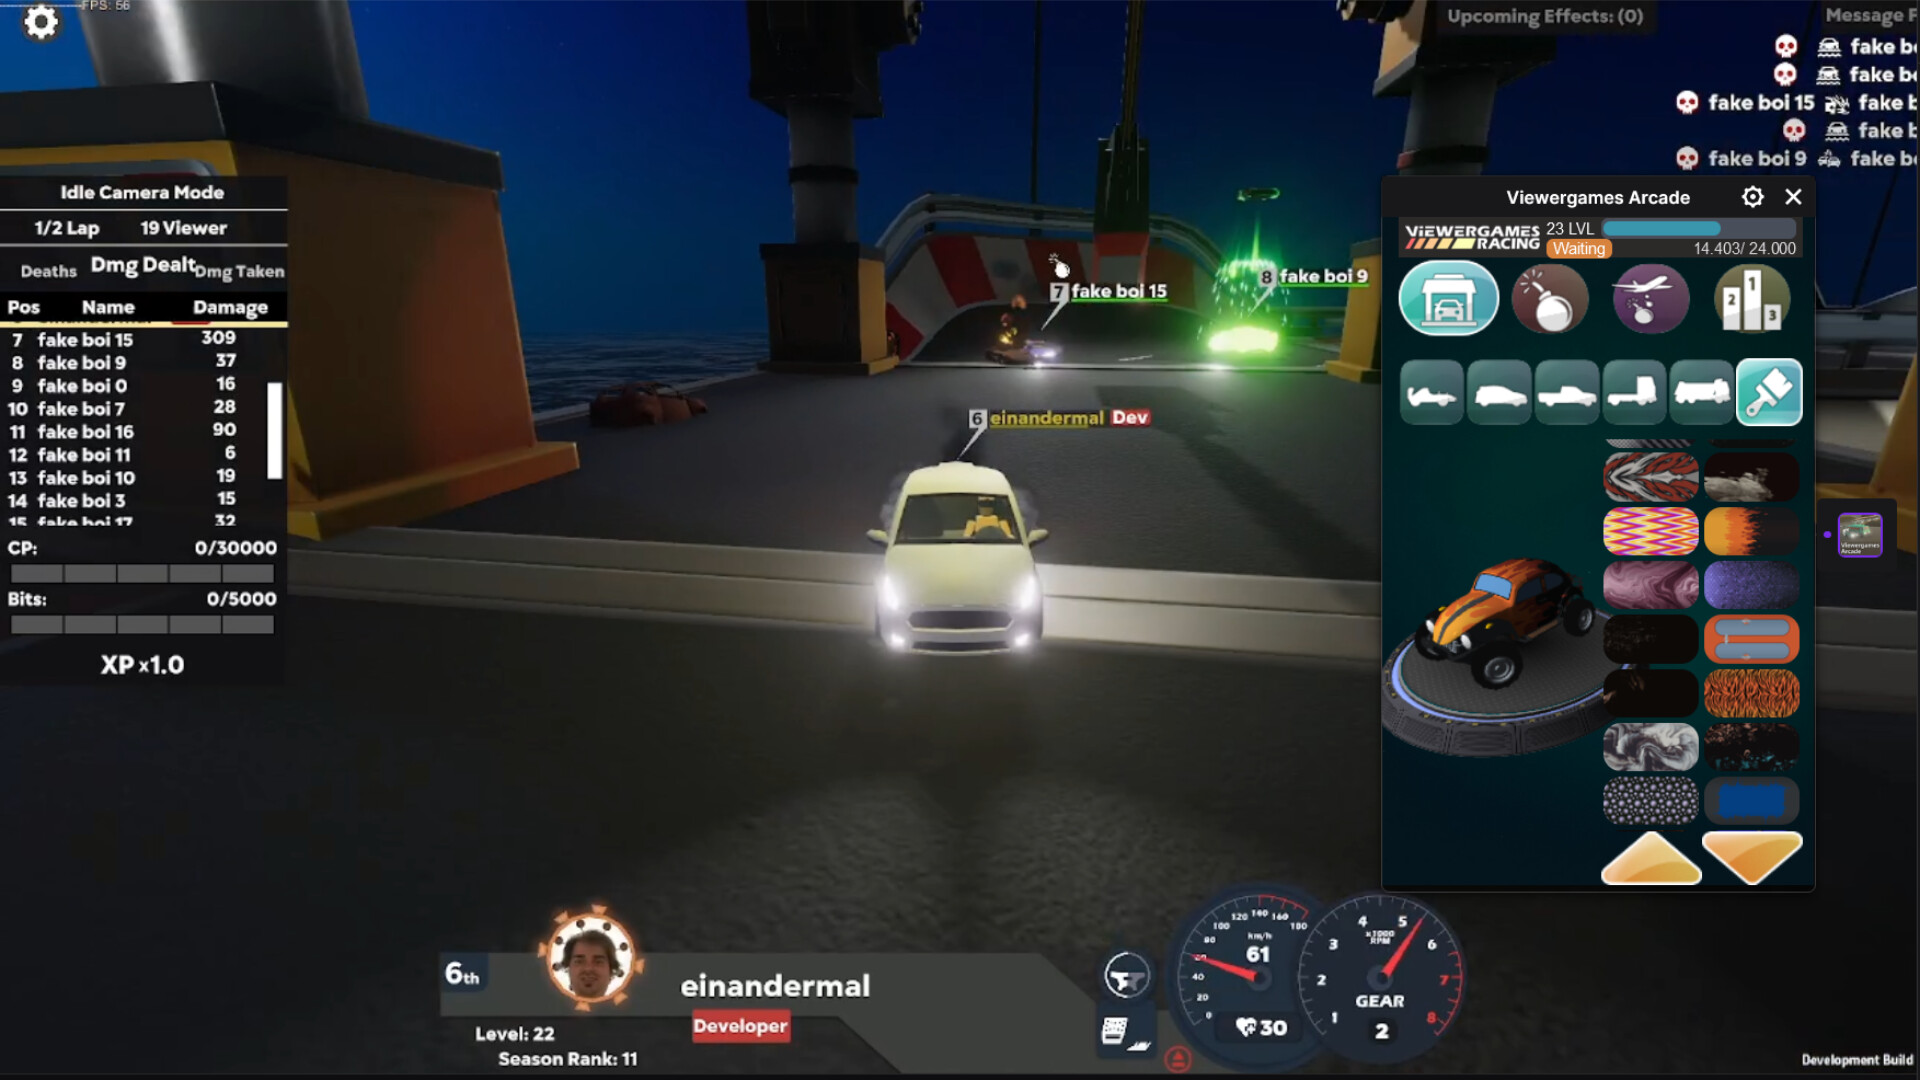 Viewergames Racing Featured Screenshot #1